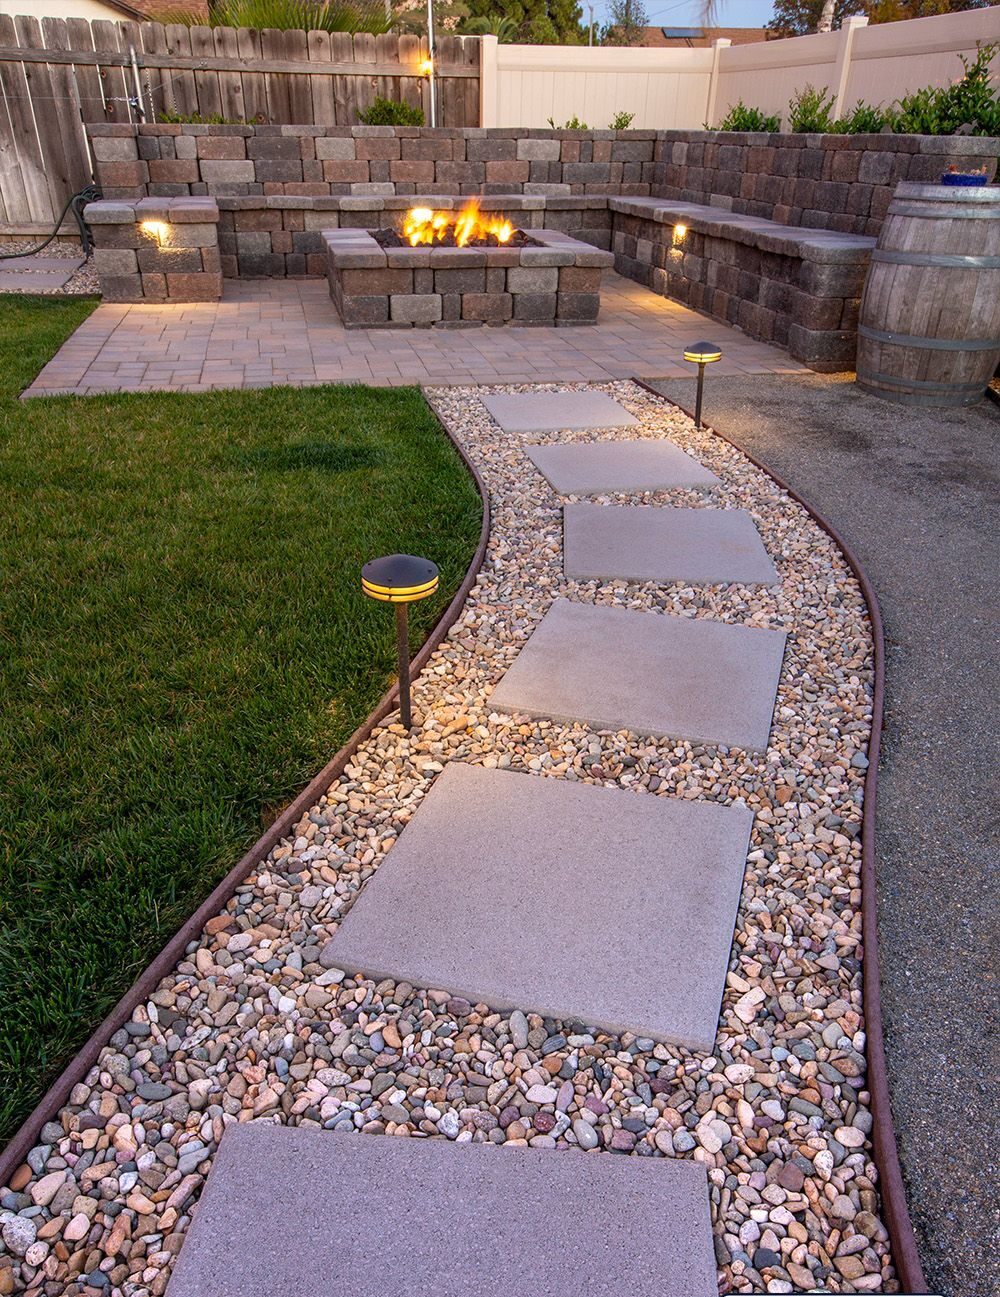 Creative Ways to Incorporate Stones in Your Garden Design